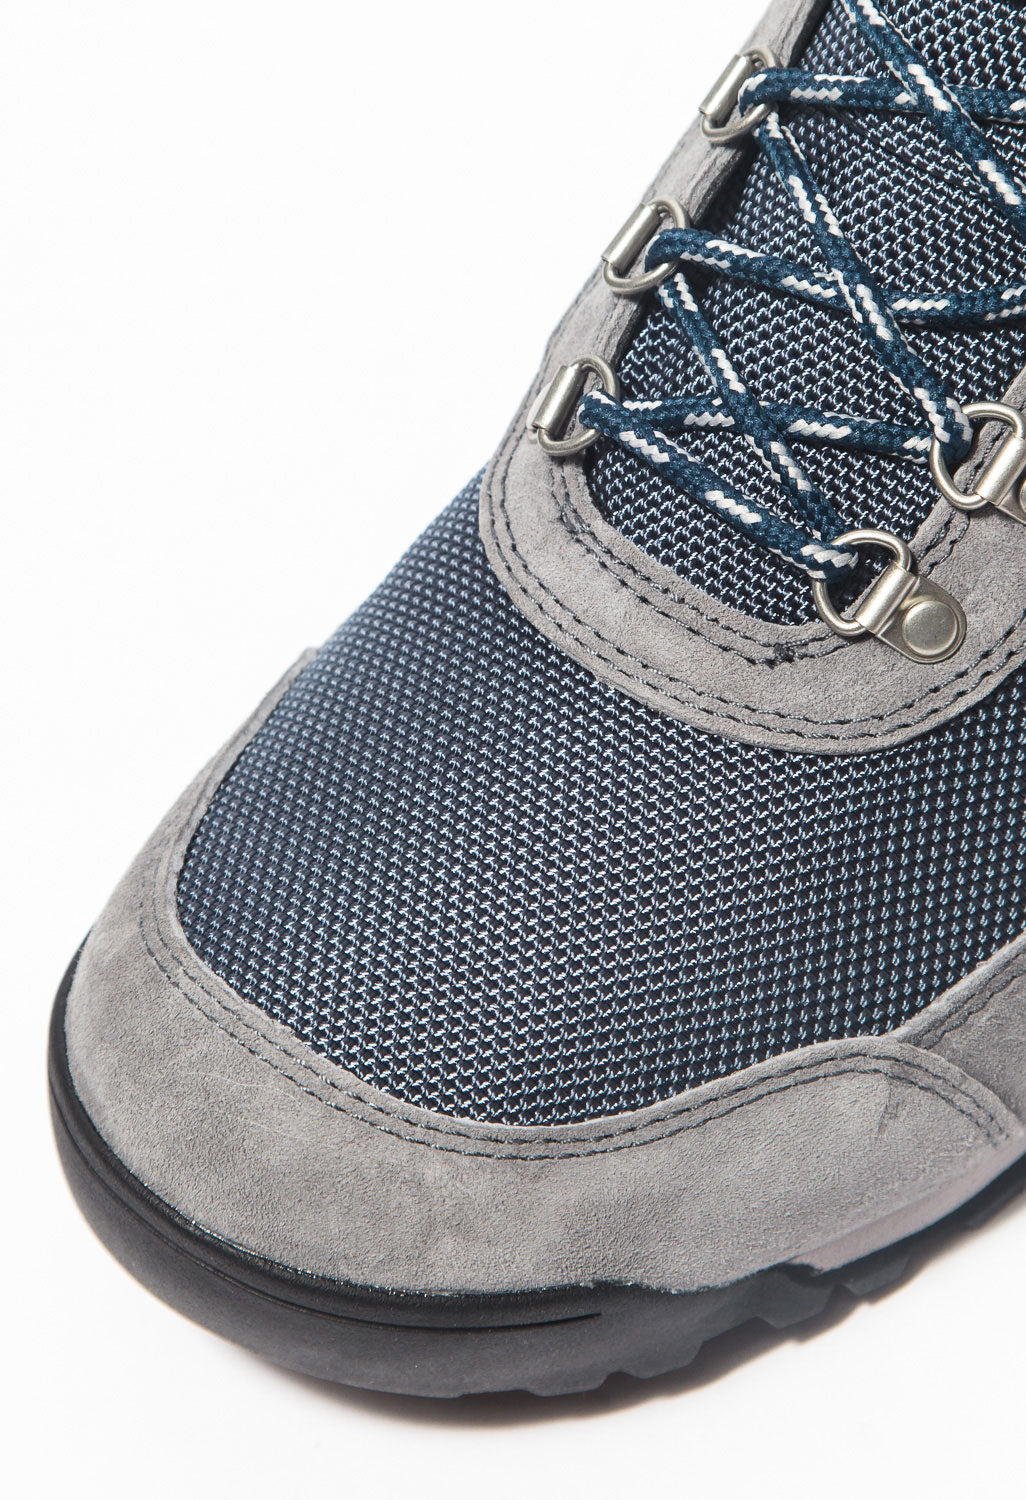 Danner Jag Women's Boots - Steel Grey / Blue Wing